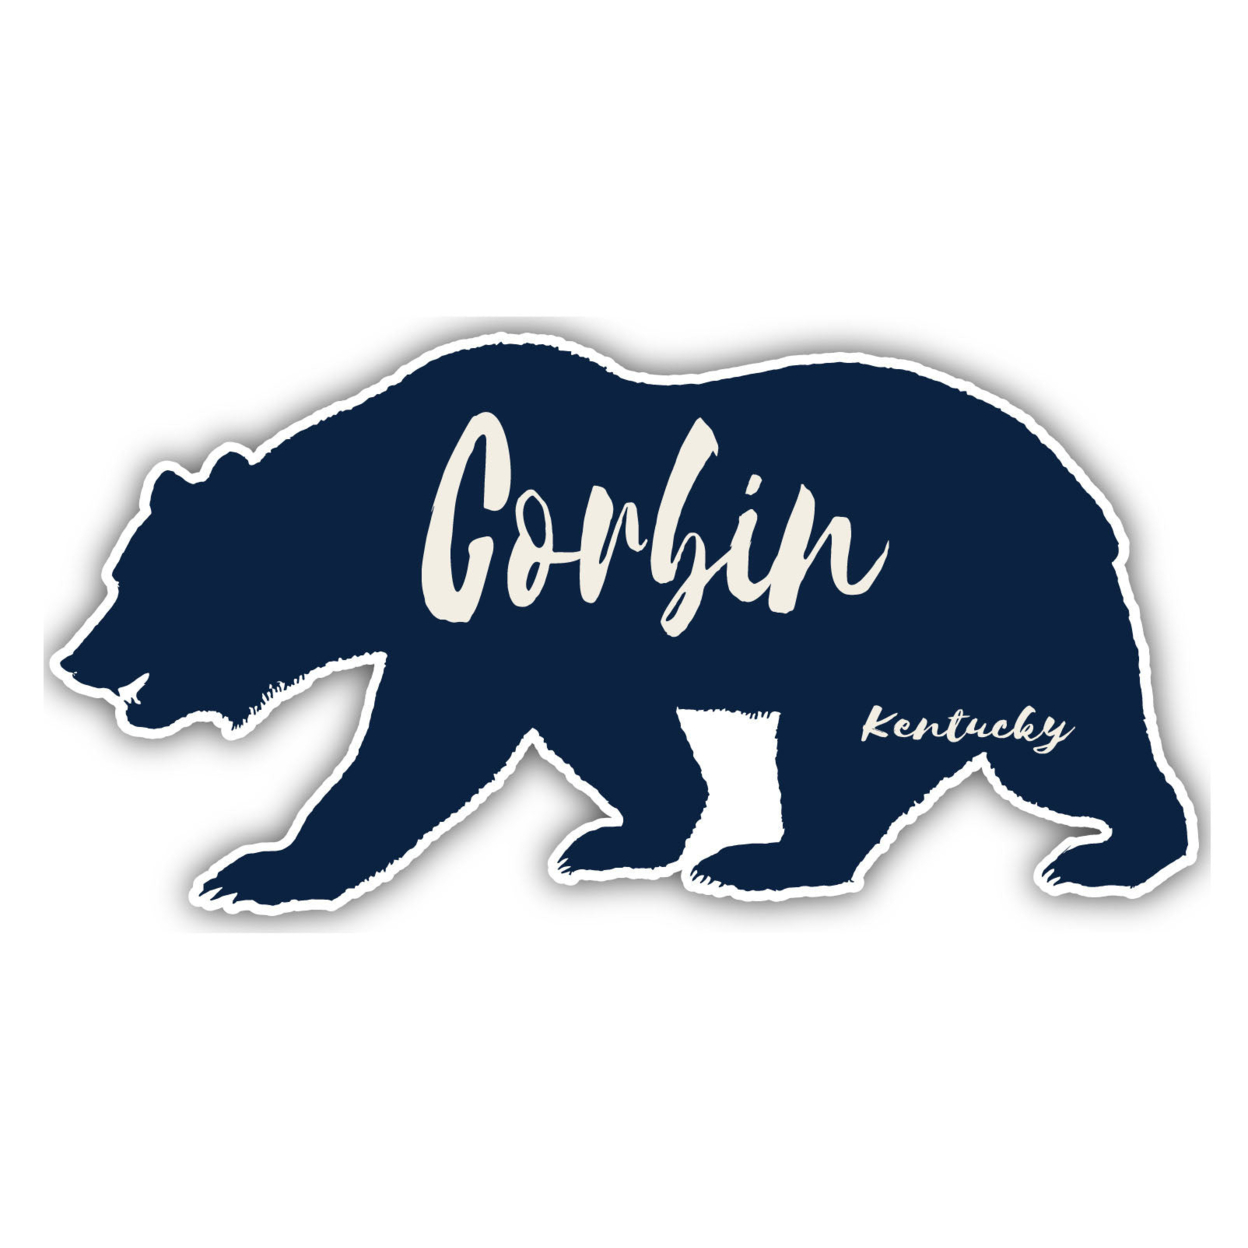 Corbin Kentucky Souvenir Decorative Stickers (Choose Theme And Size) - 4-Pack, 4-Inch, Bear